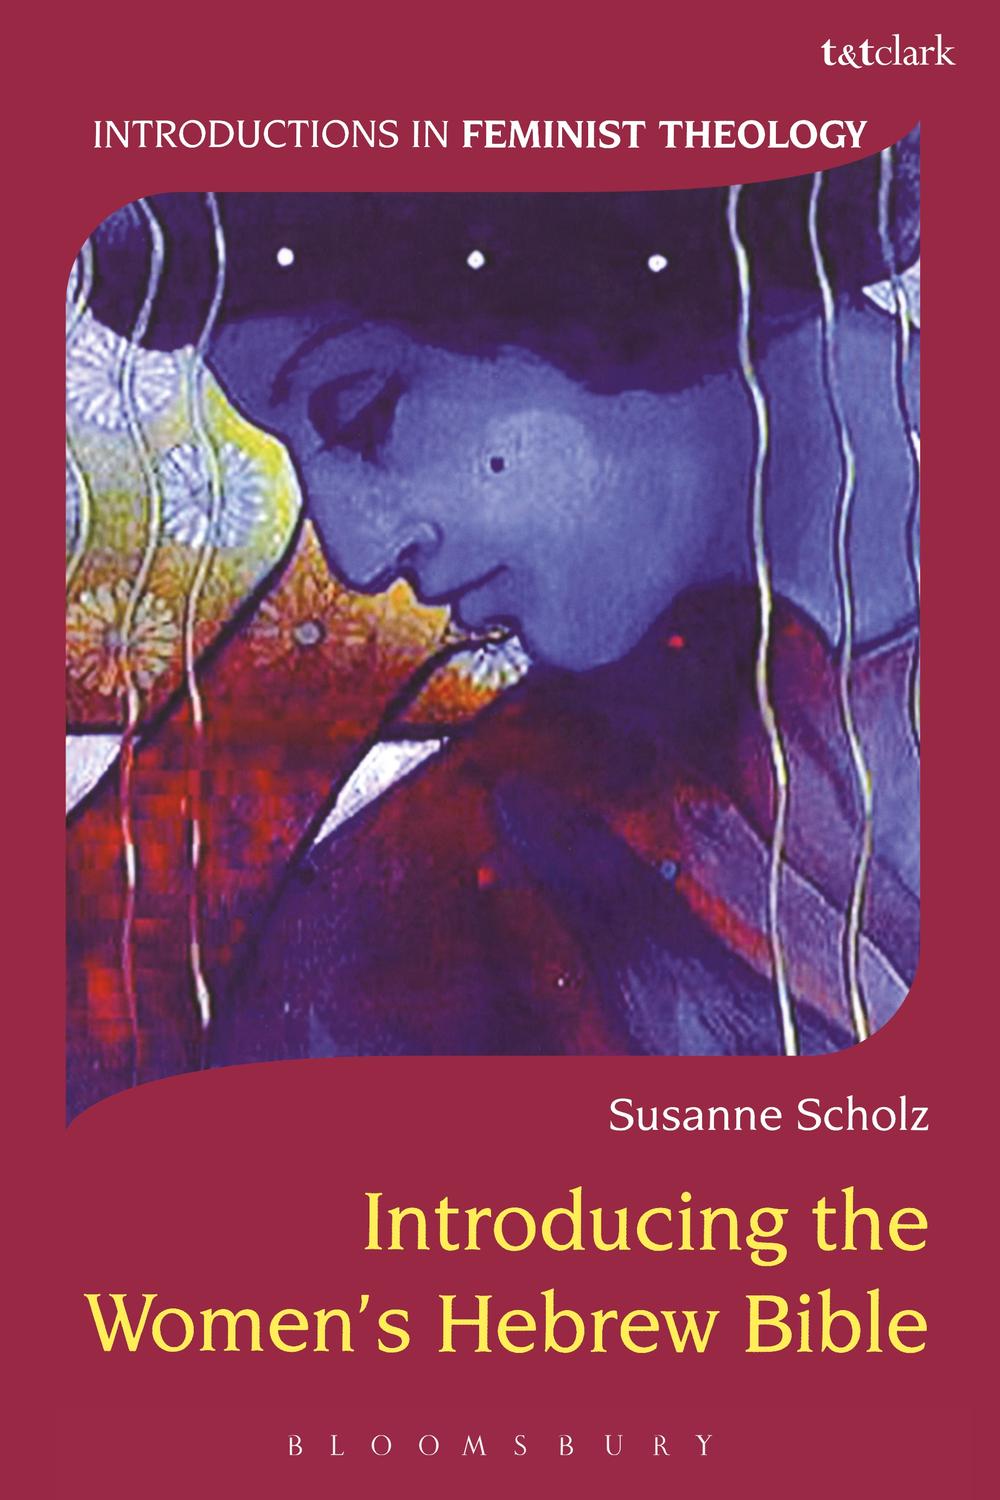 Introducing the Women's Hebrew Bible - Susanne Scholz